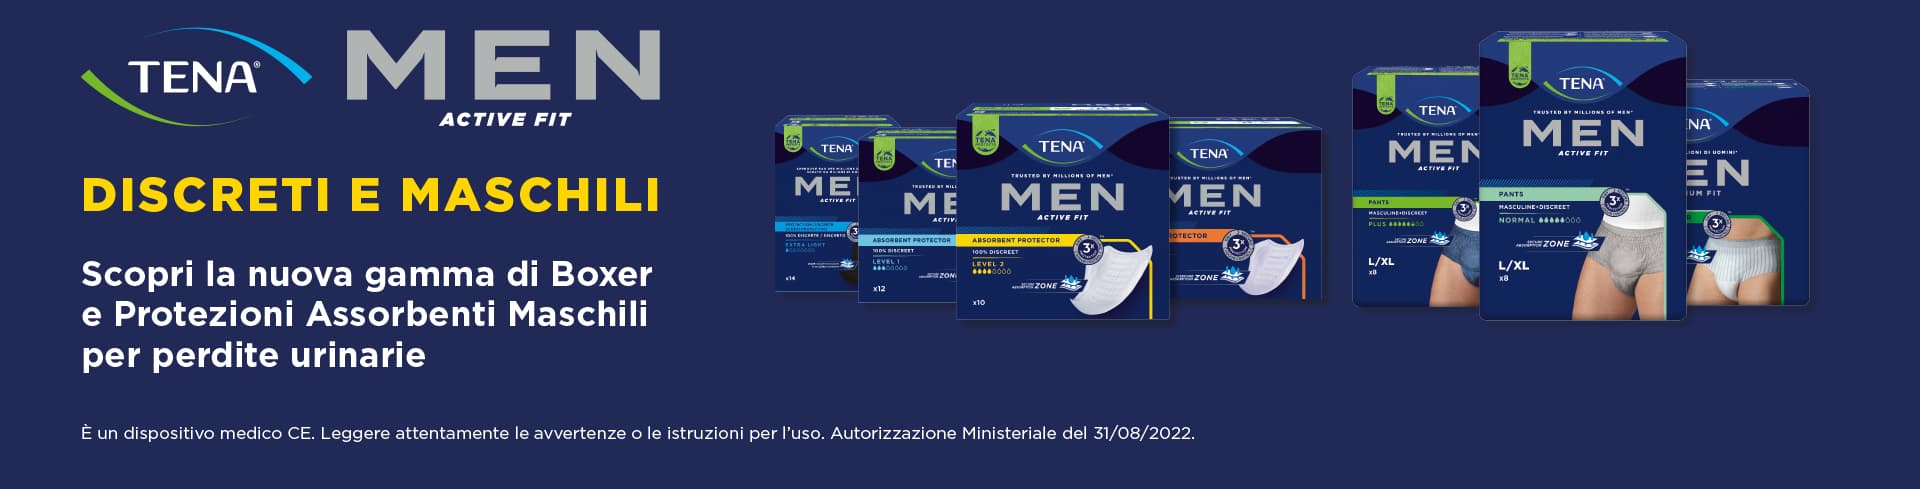 banner promozionale TENA Men desktop